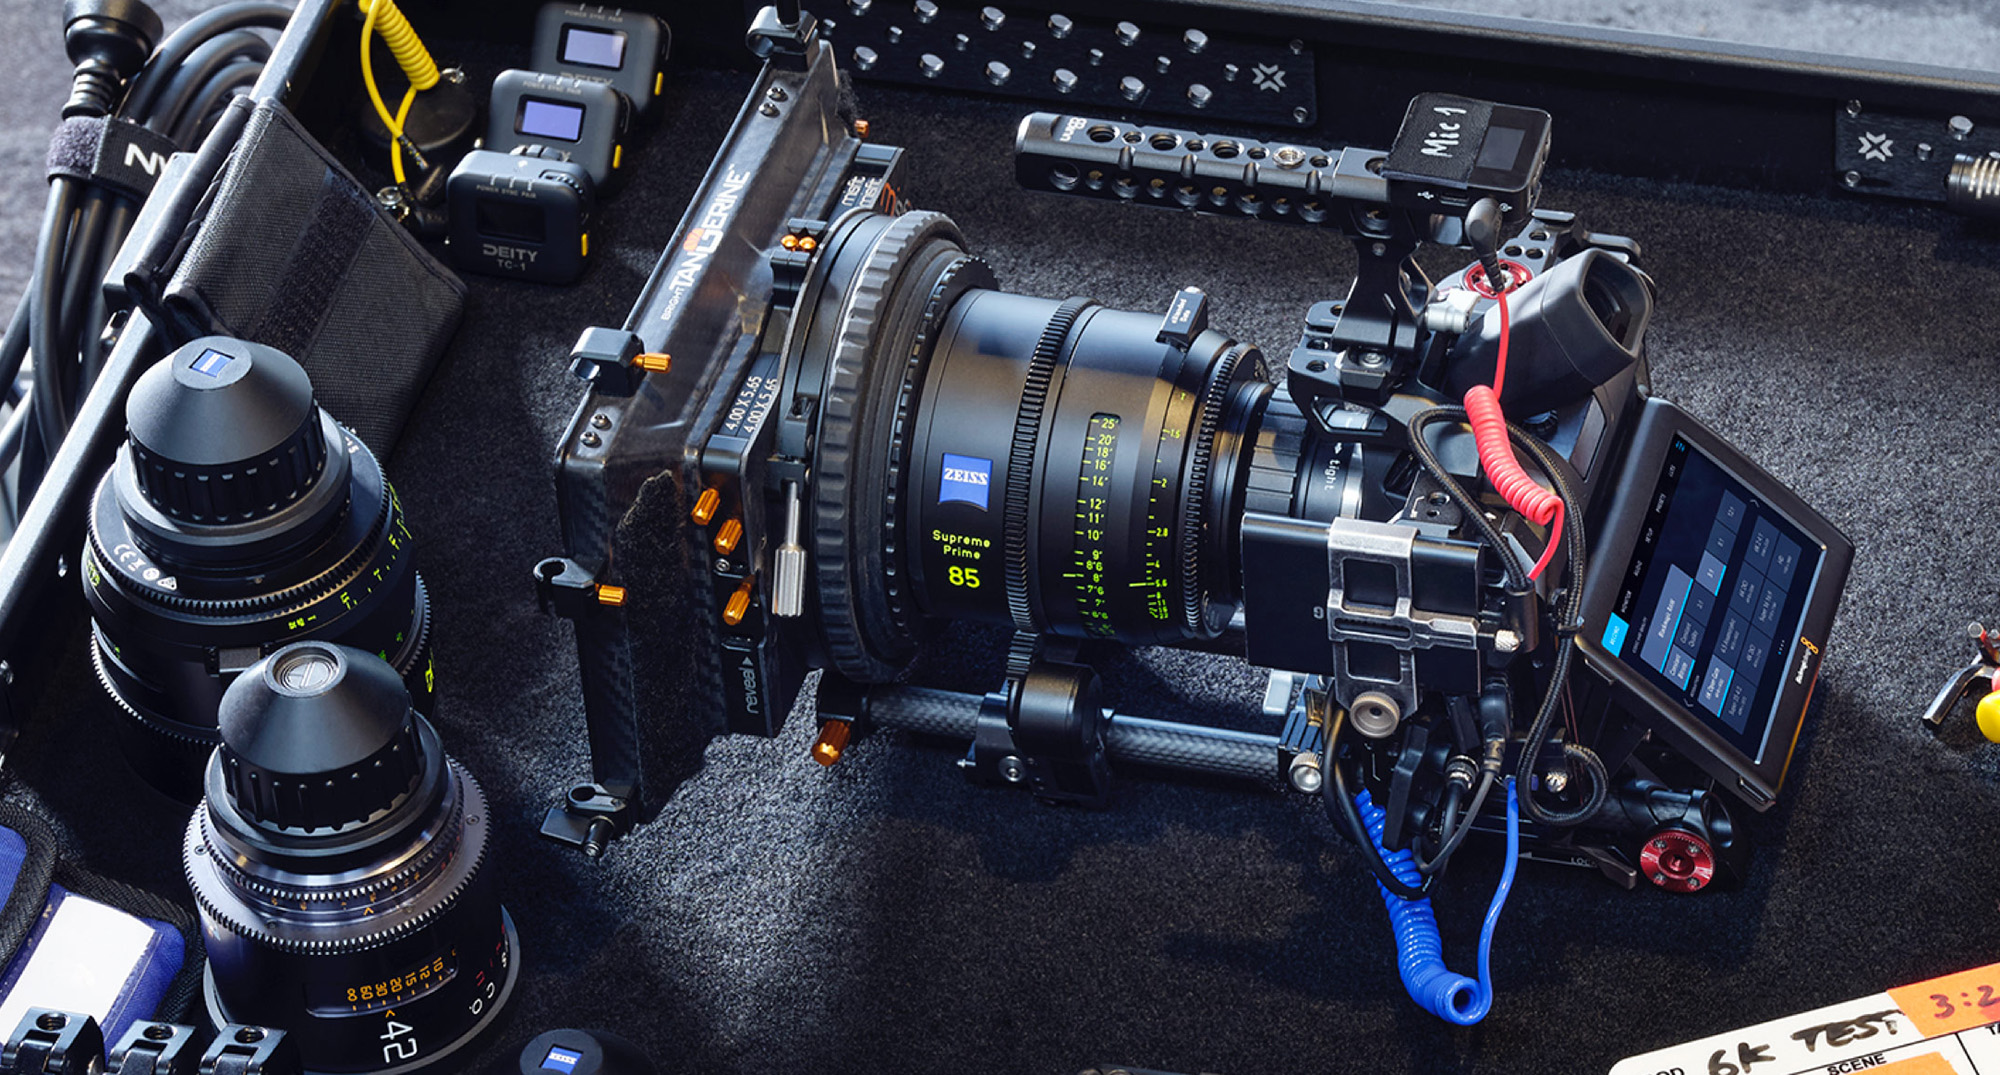 Review: Blackmagic Cinema Camera 6K - Blackmagic Design Expands Its Cinema Camera Lineup 39